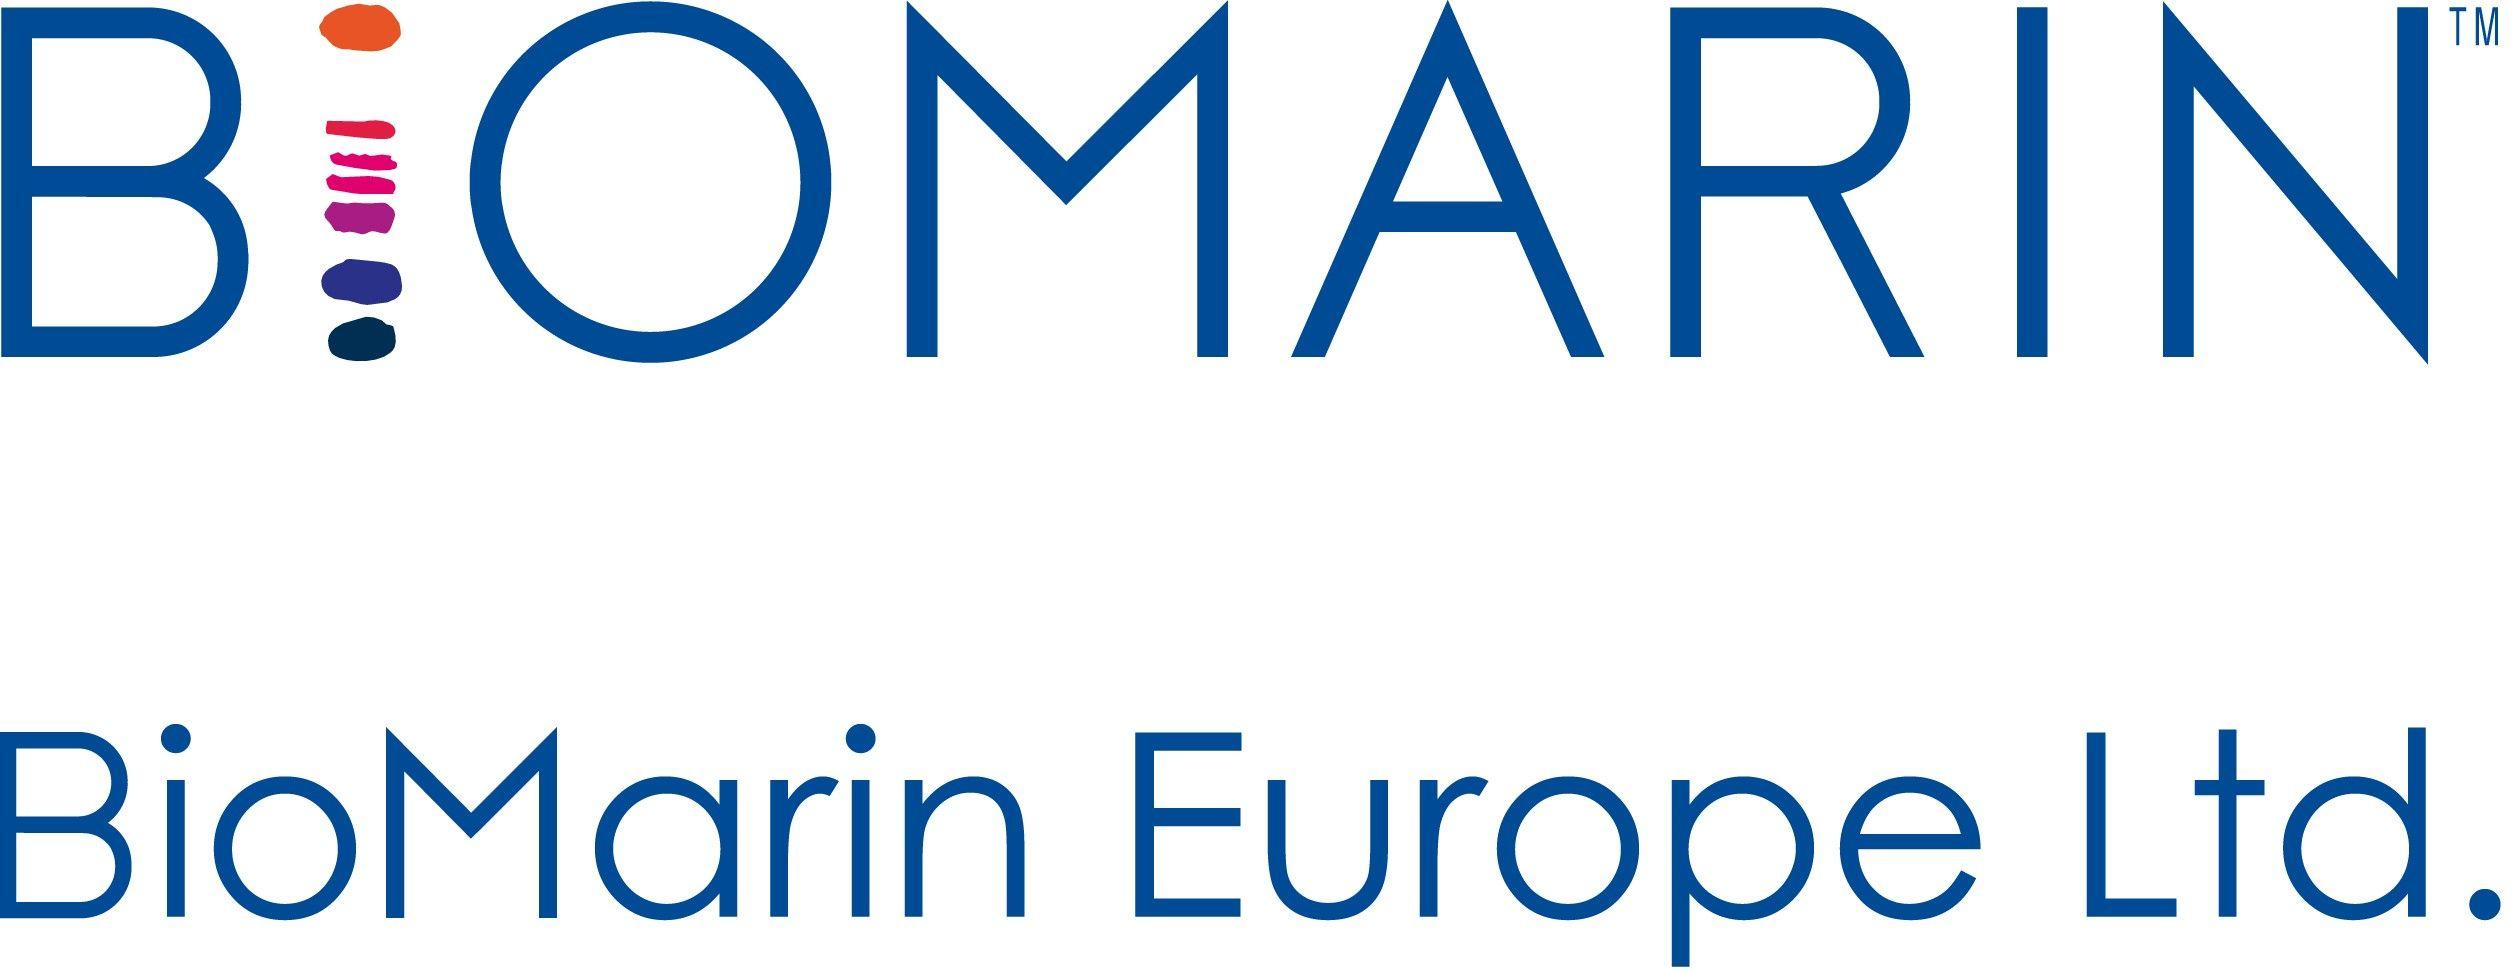 BioMarin Logo - BioMarin_Europe_logo4c150dpi_RGB 2020 : The European